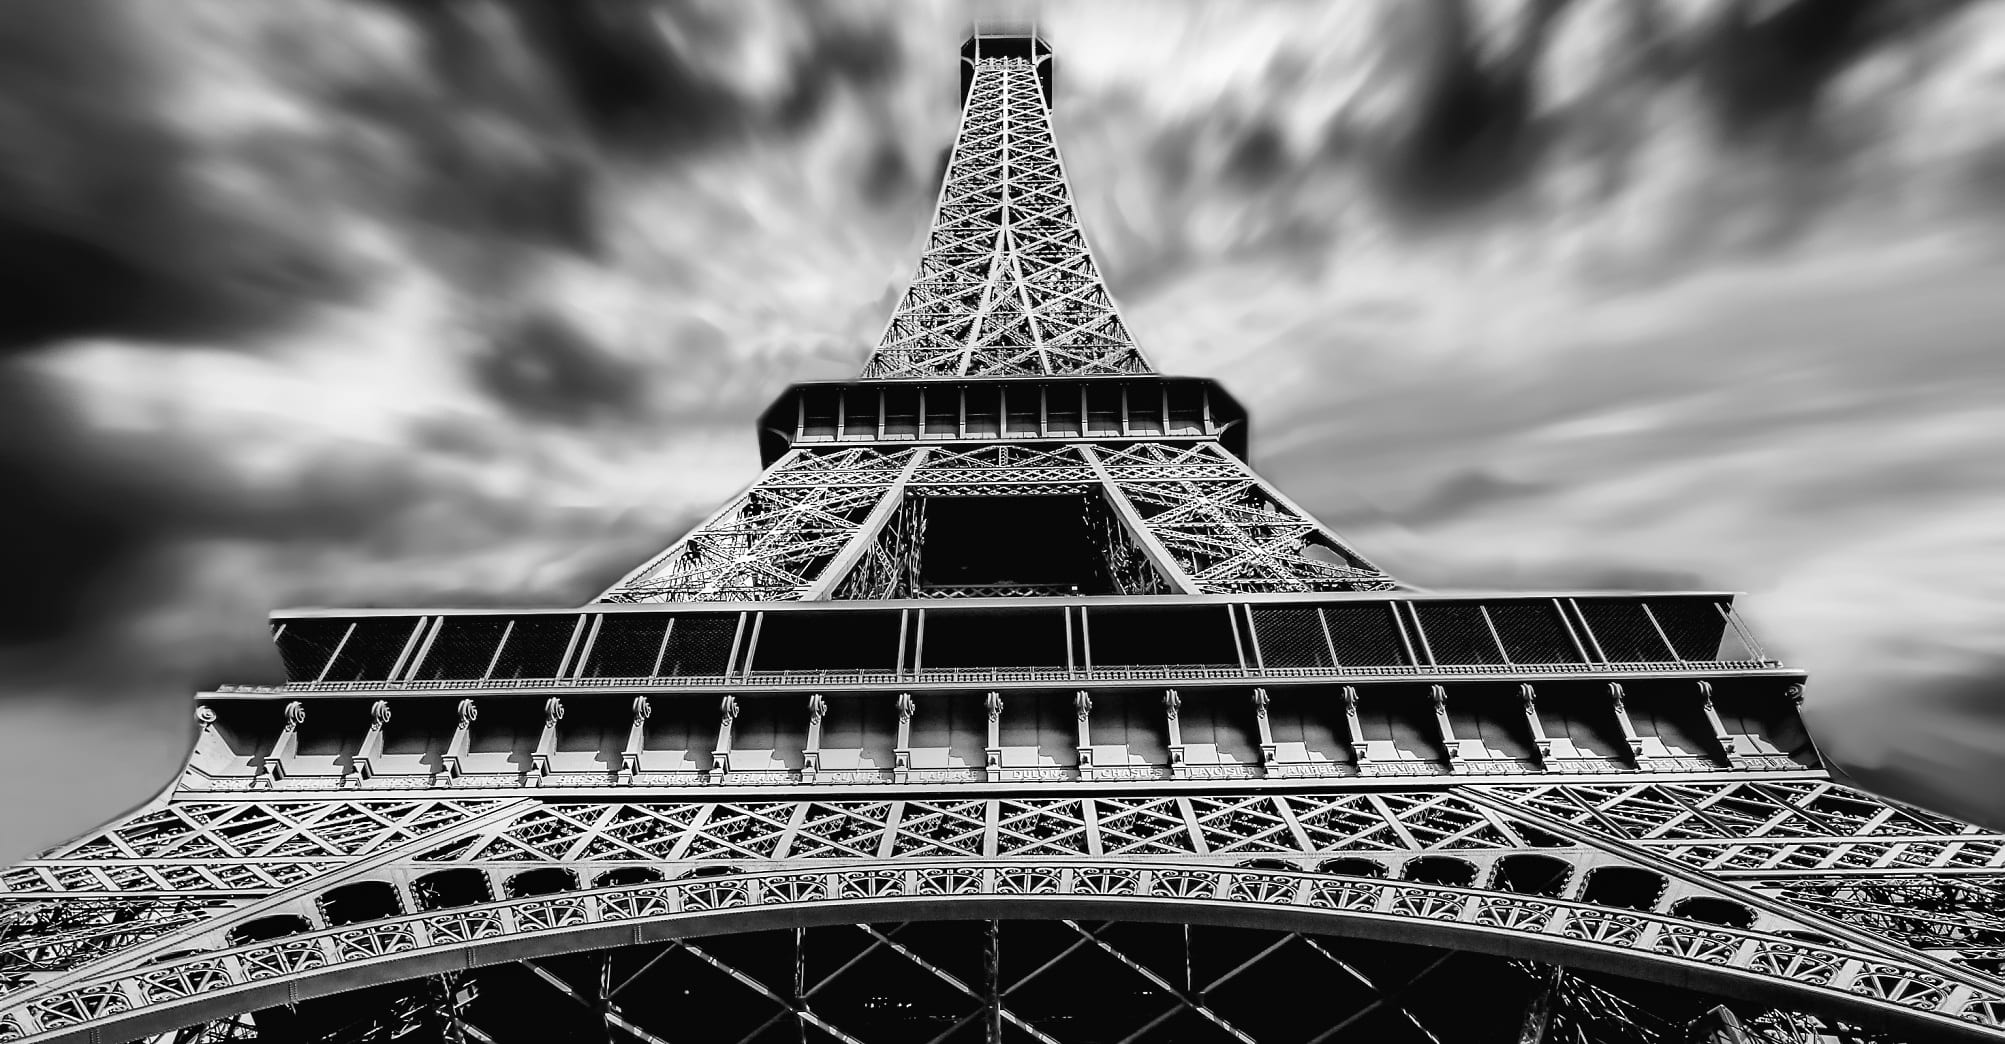 Group-Tour Eiffel piqsels.com-id-ffgtf.jpg